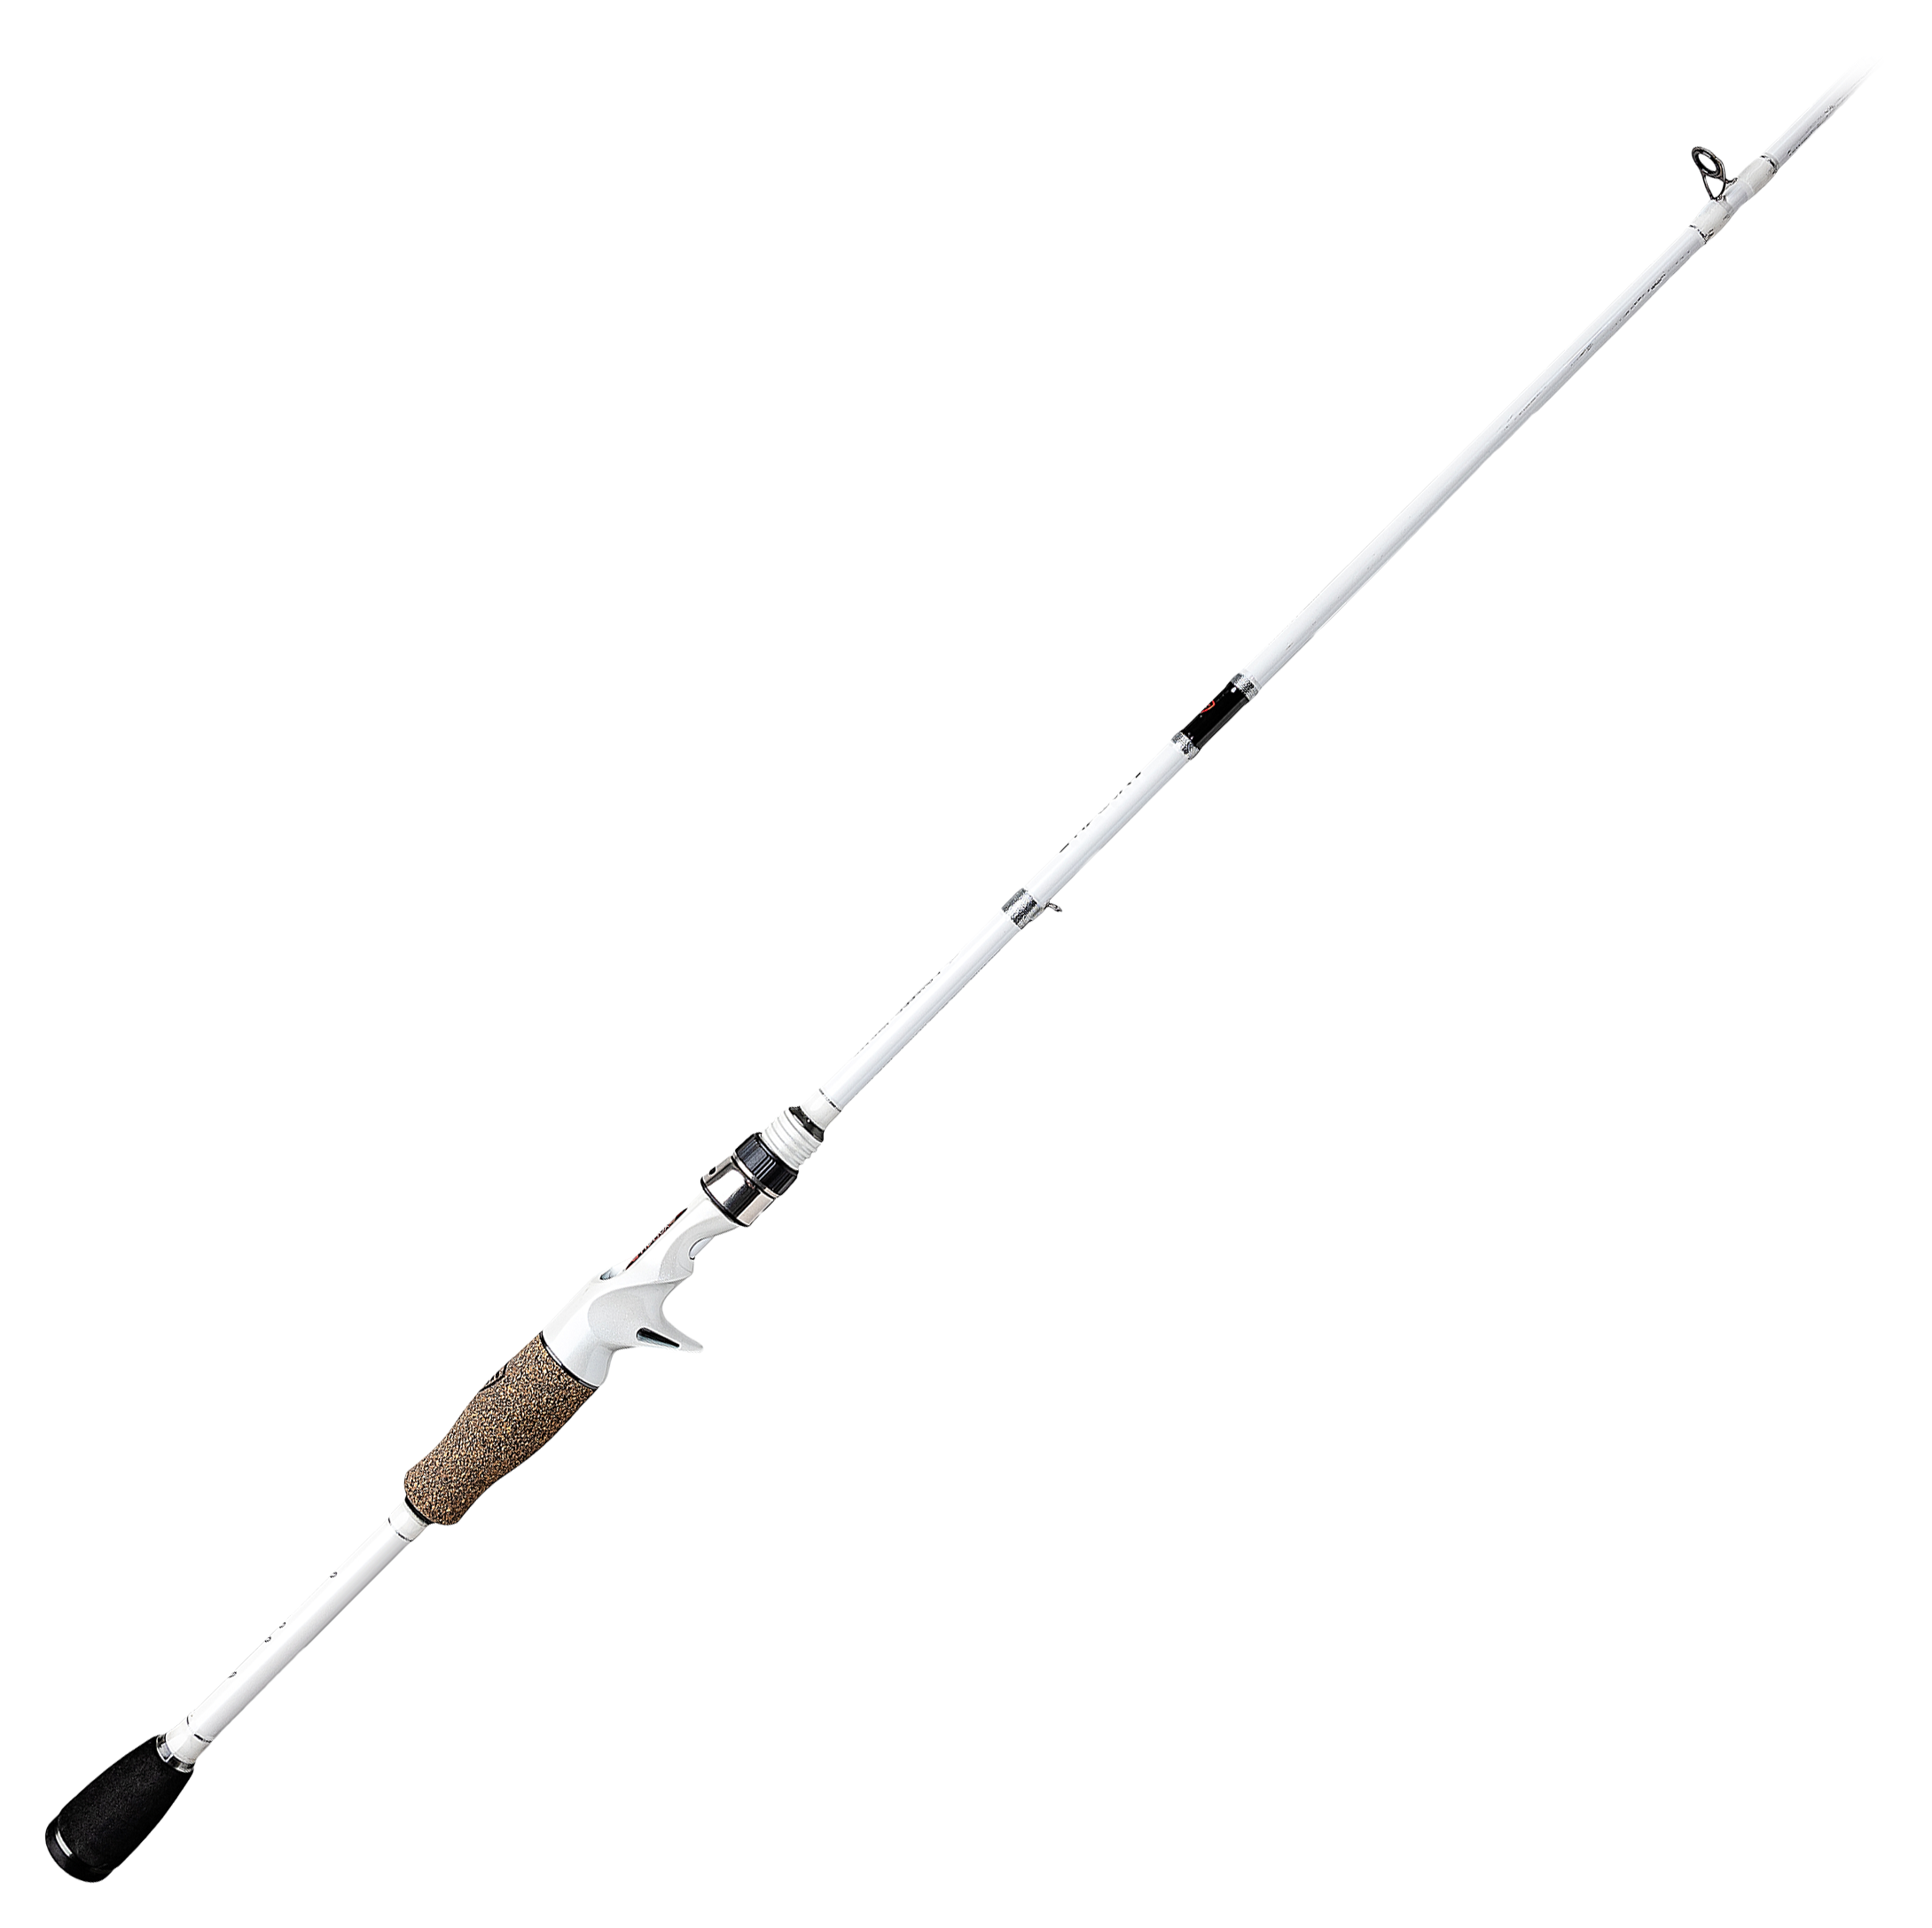 White Bird ✖️ Soleus XCS What rod are you throwing this on? #favoriterods  #favoritefishing #bassfishing #fishing #bass #reels #how